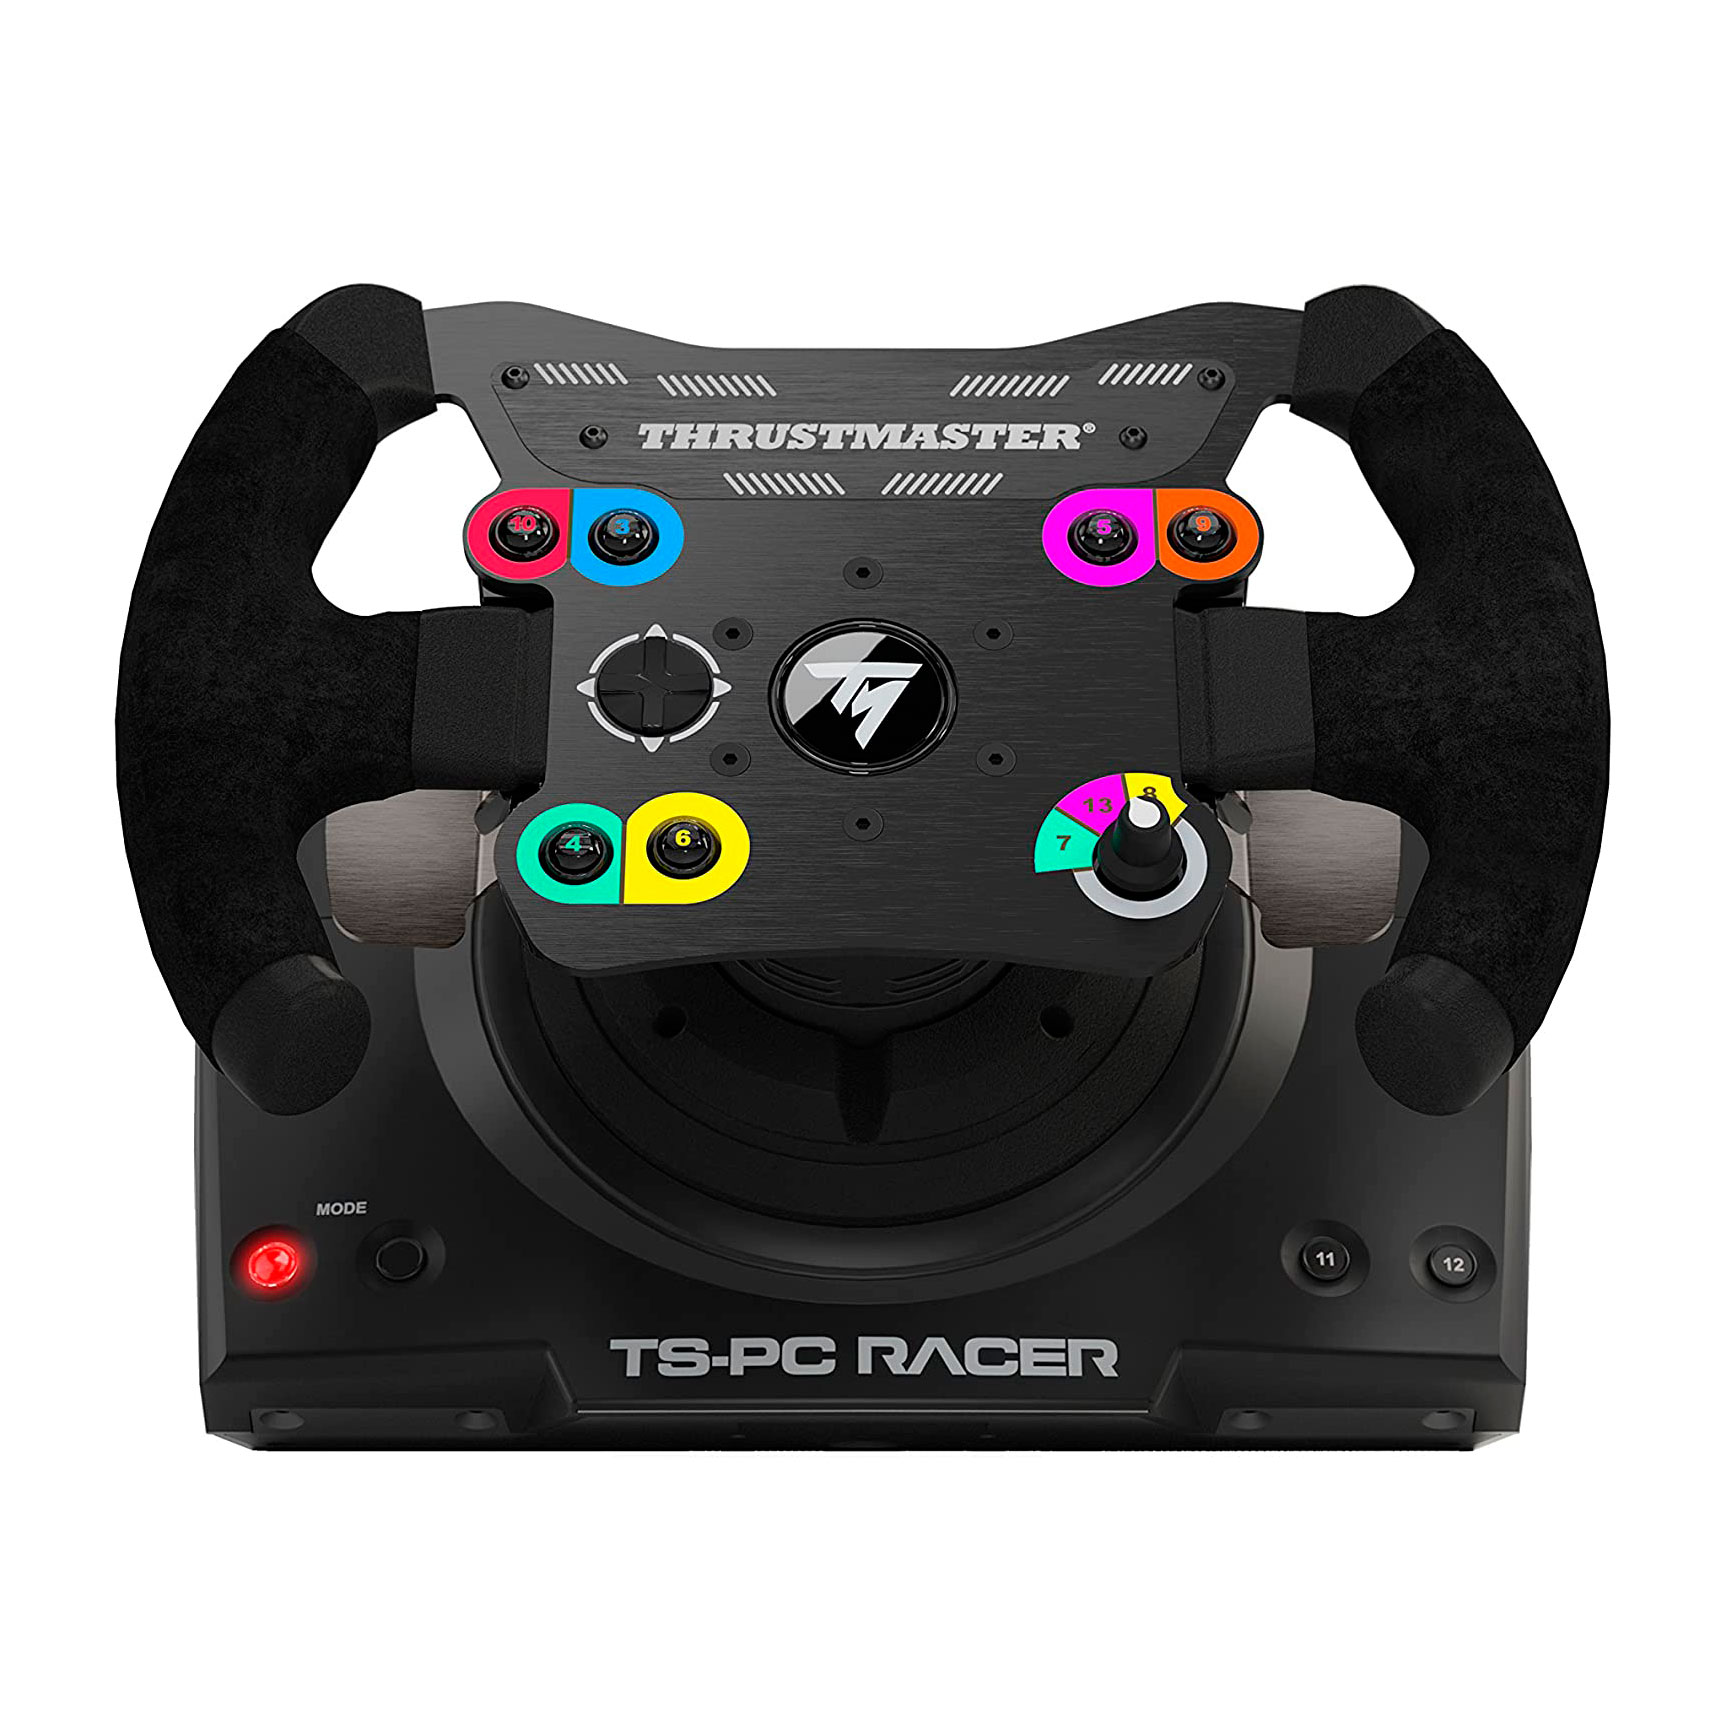 Руль Thrustmaster TS-PC Racer, черный руль thrustmaster t248x черный